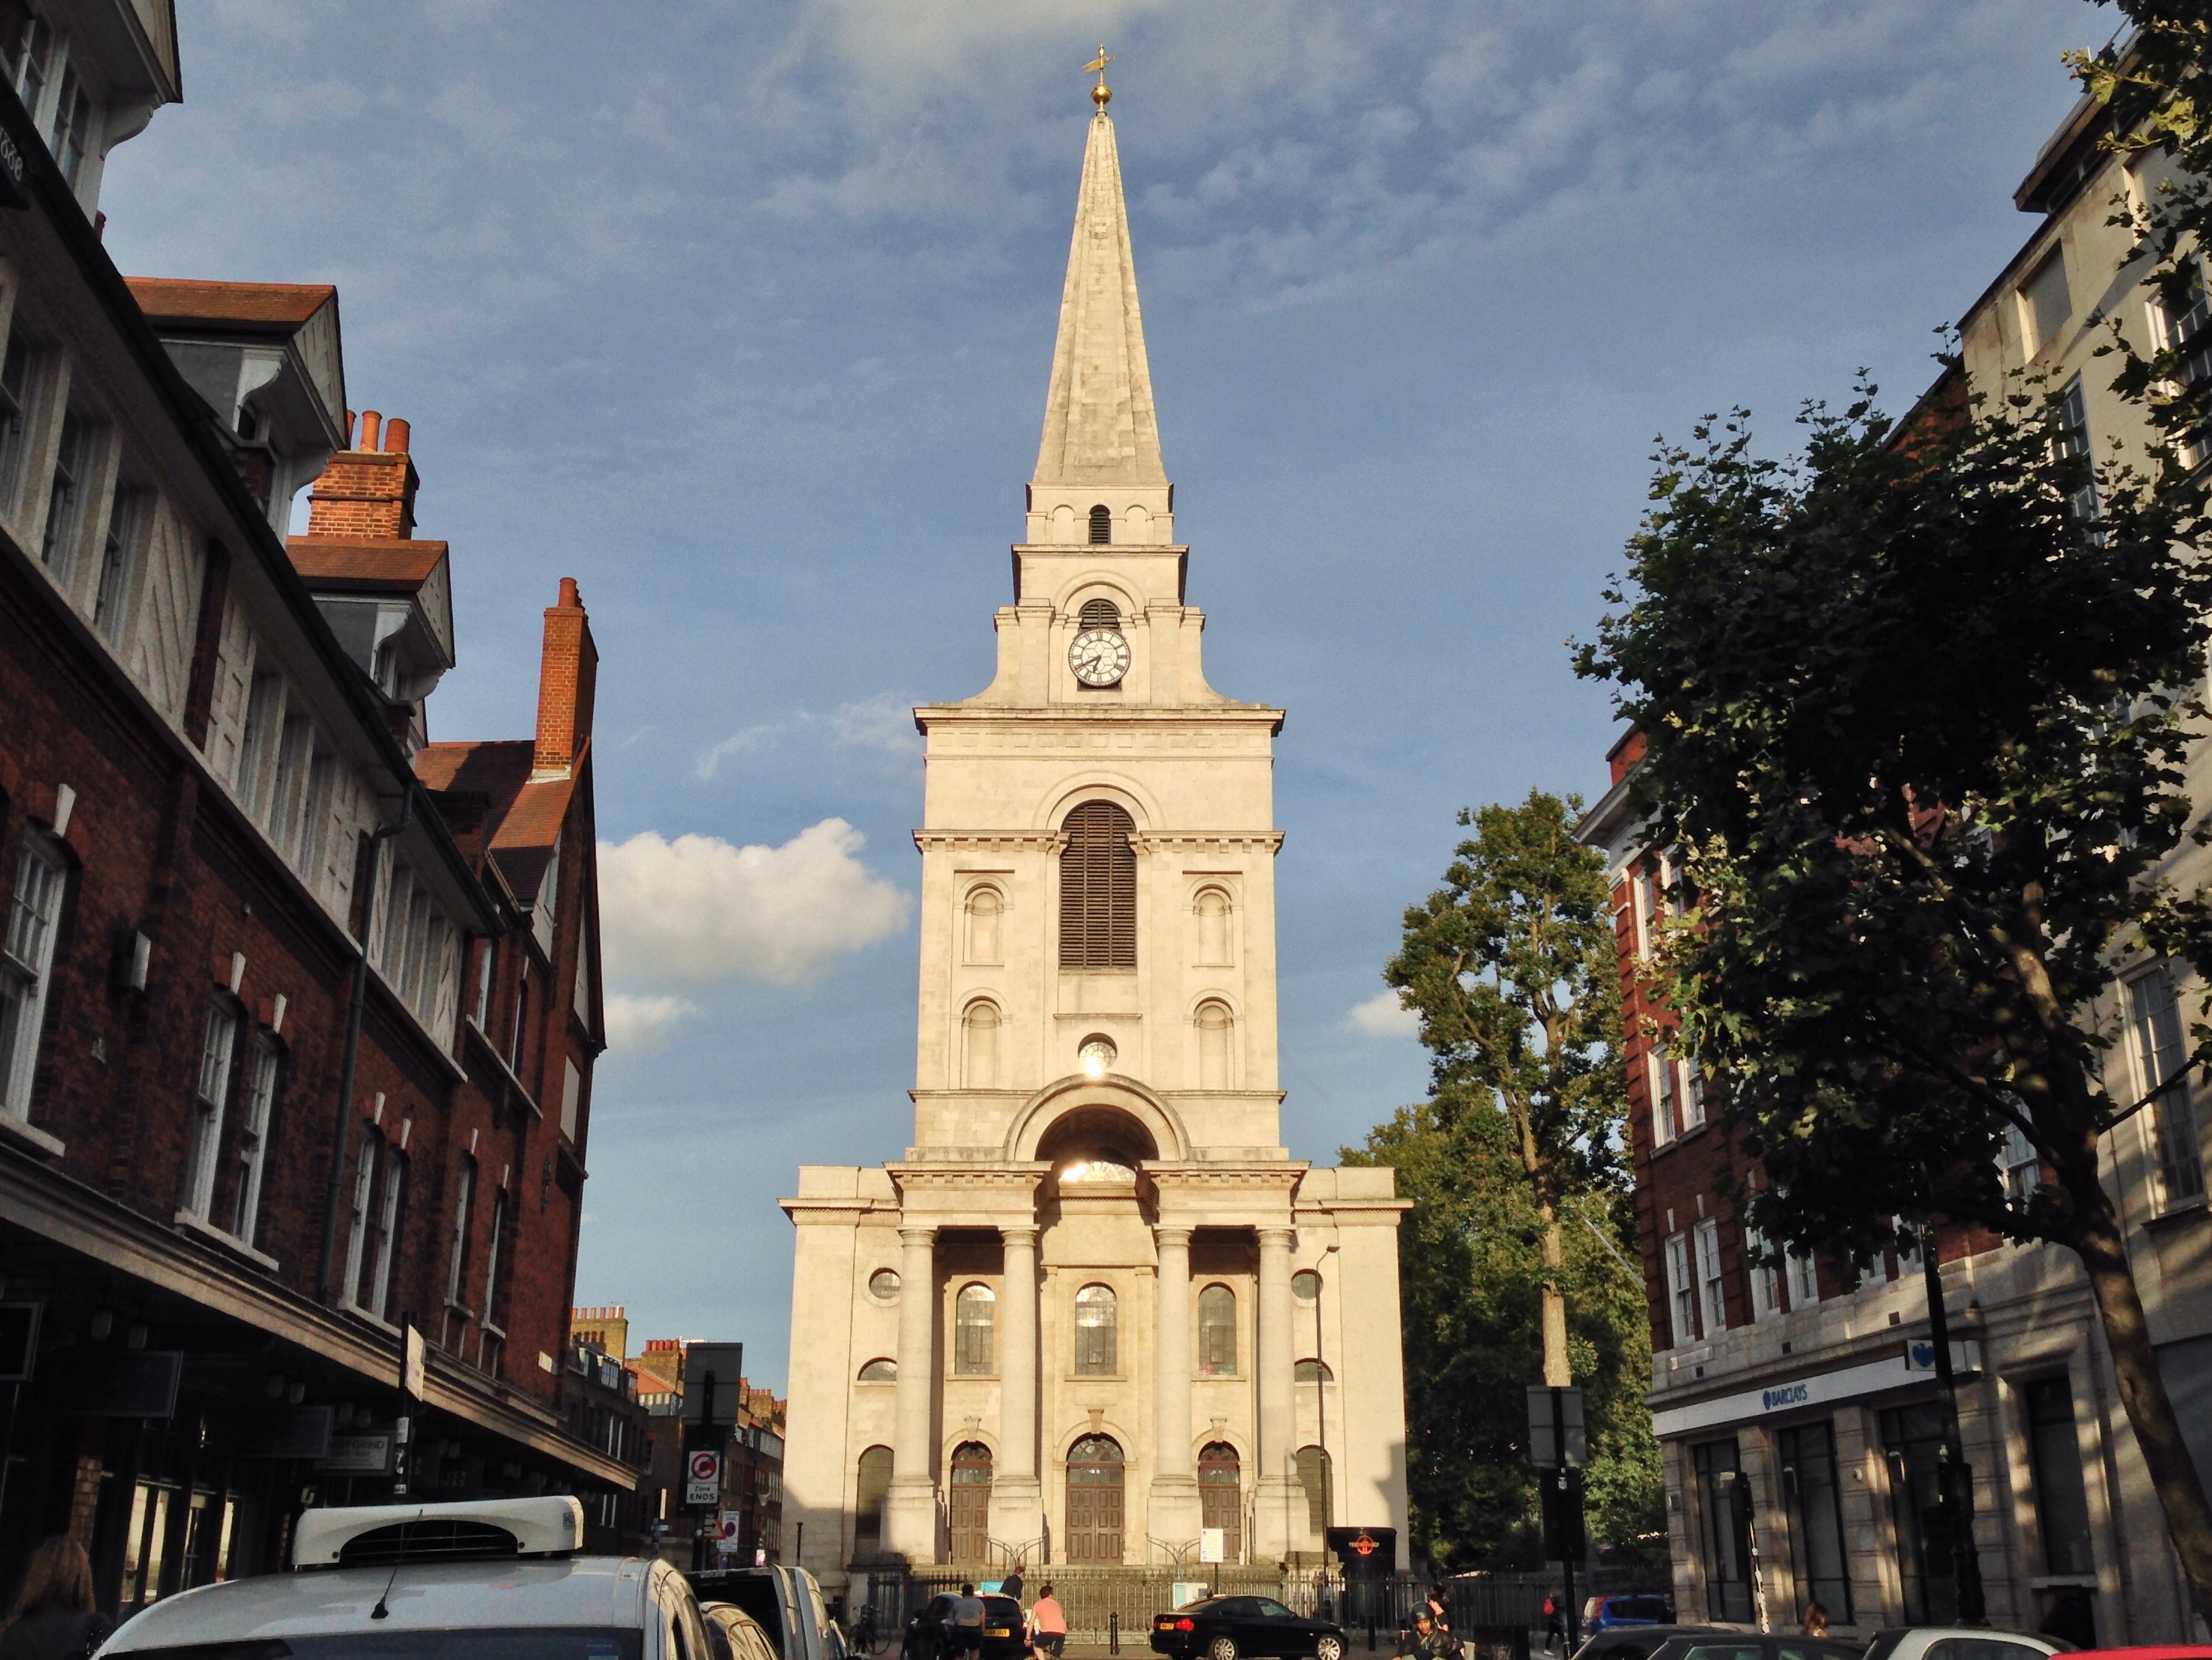 Christ-church-spitalfields.jpg